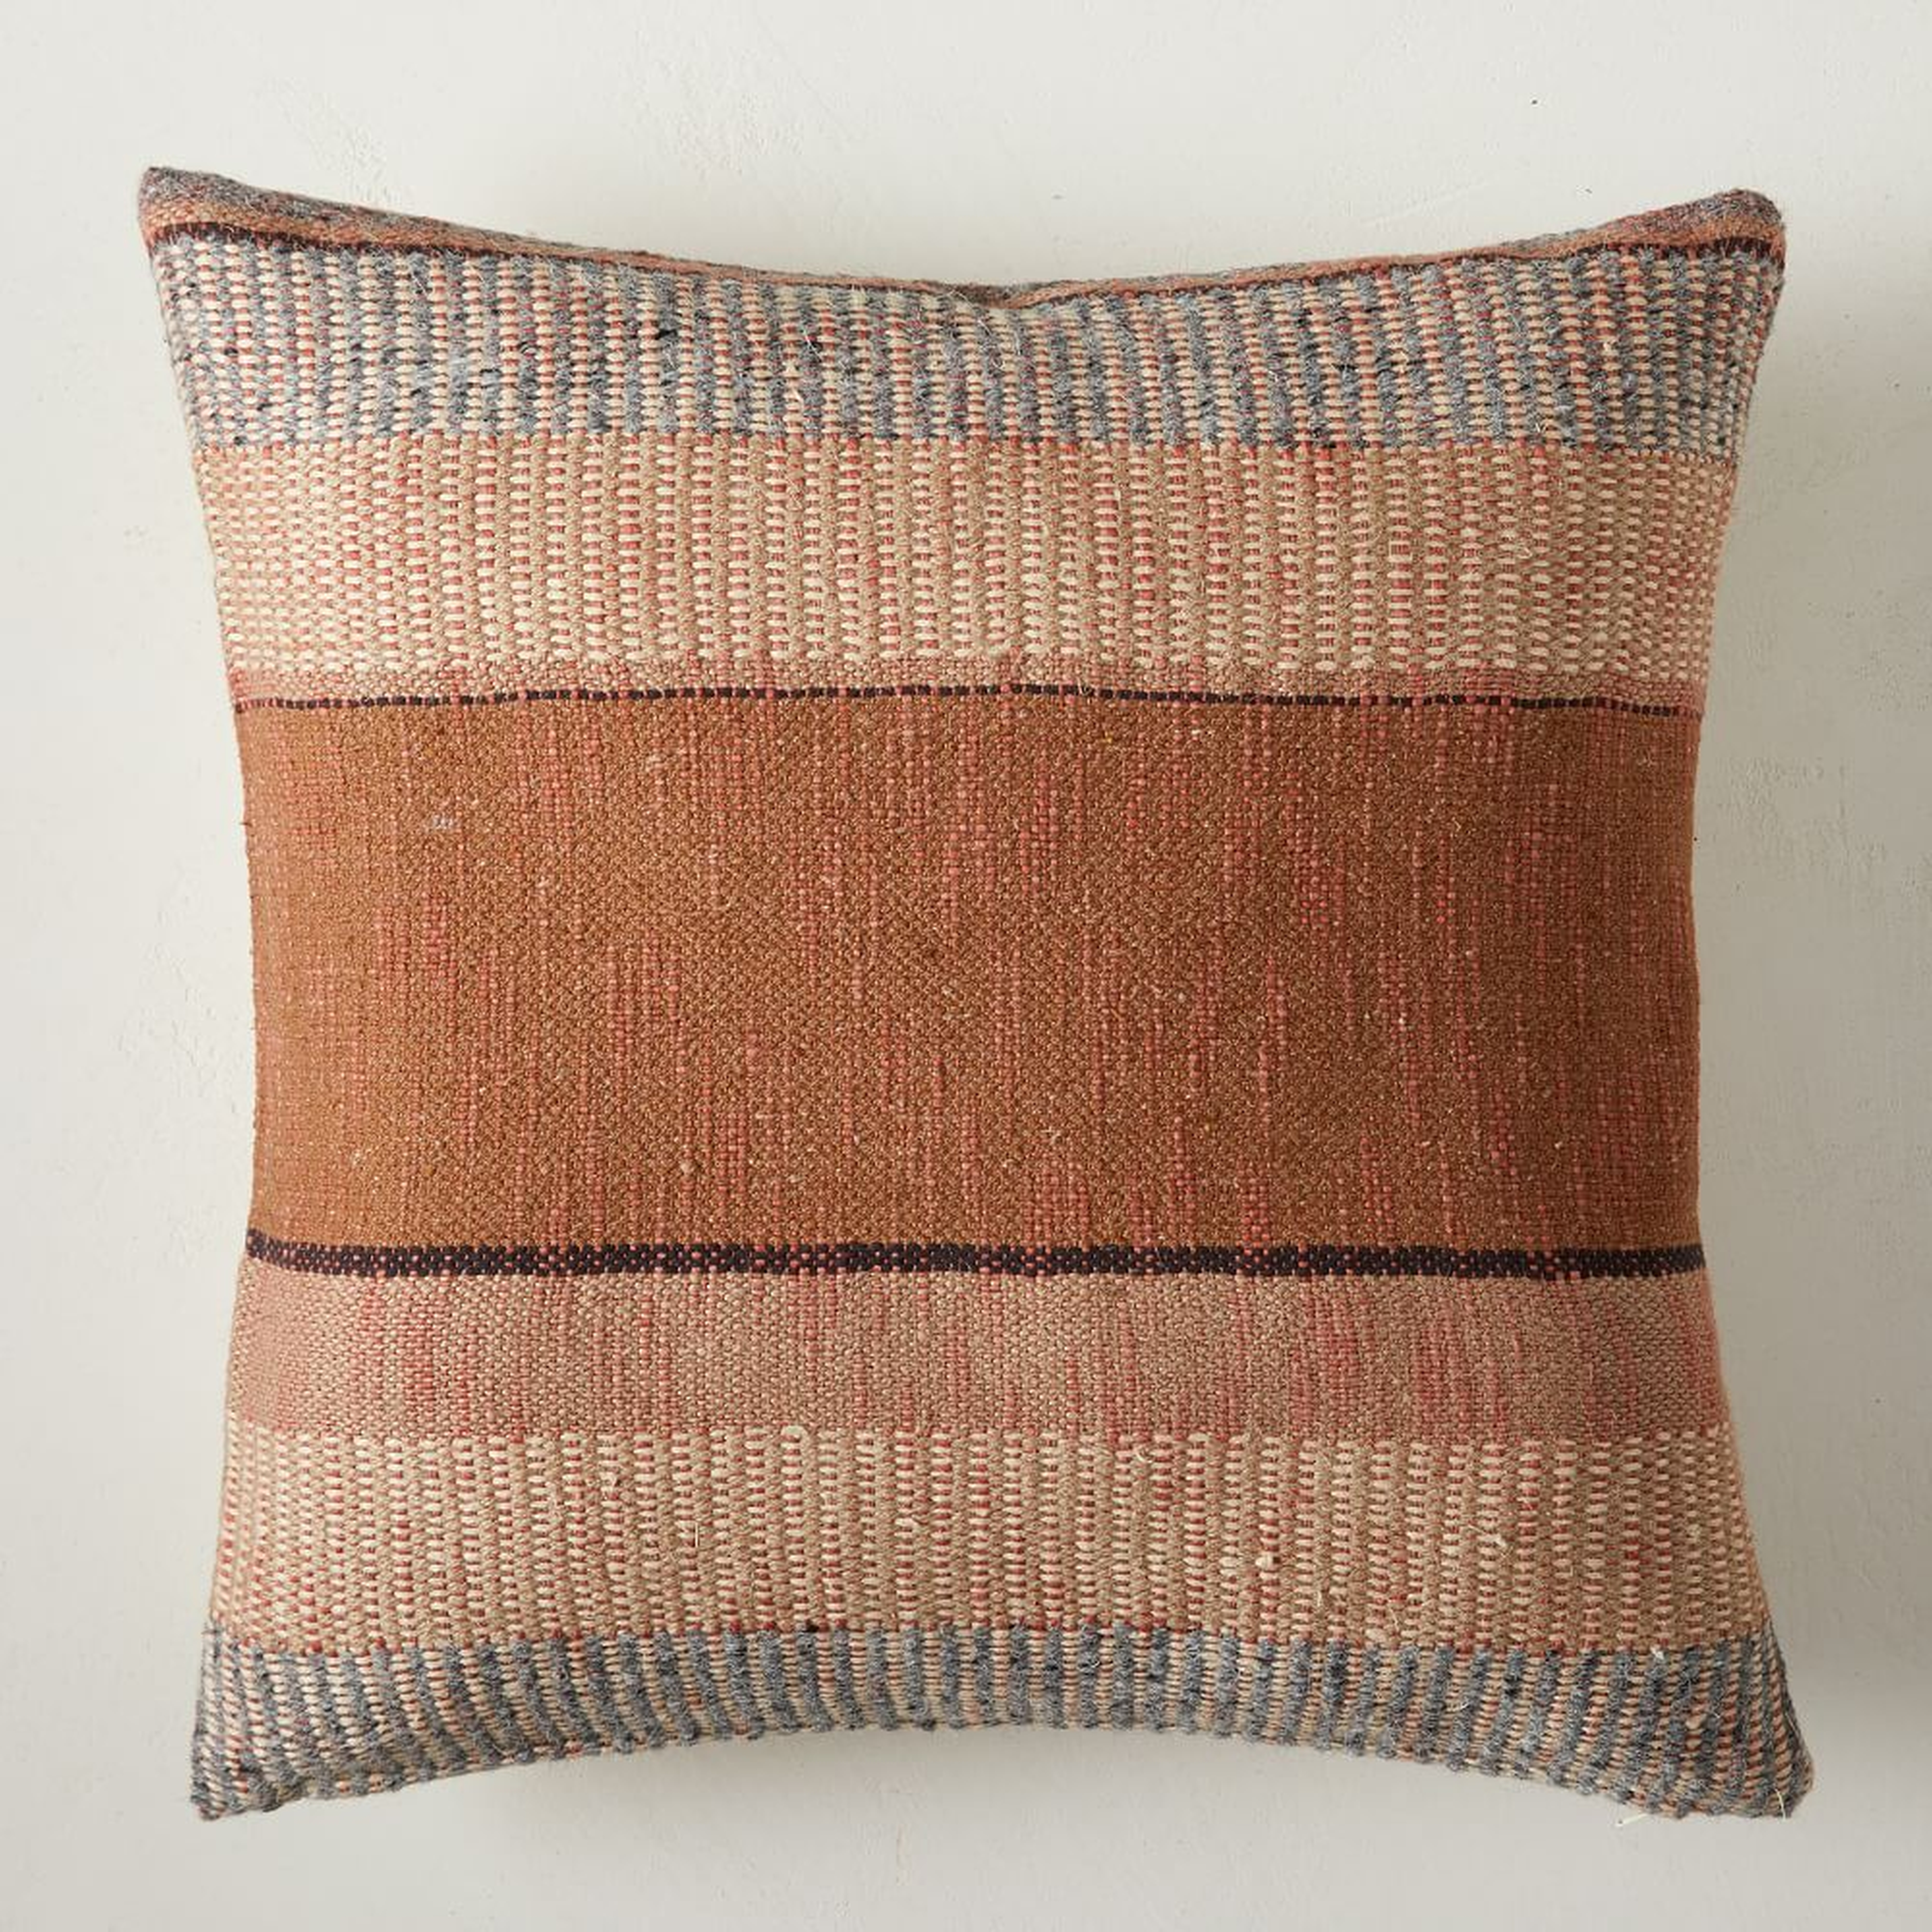 Bold Center Mixed Stripe Pillow Cover, 20"x20", Terracotta, Set of 2 - West Elm